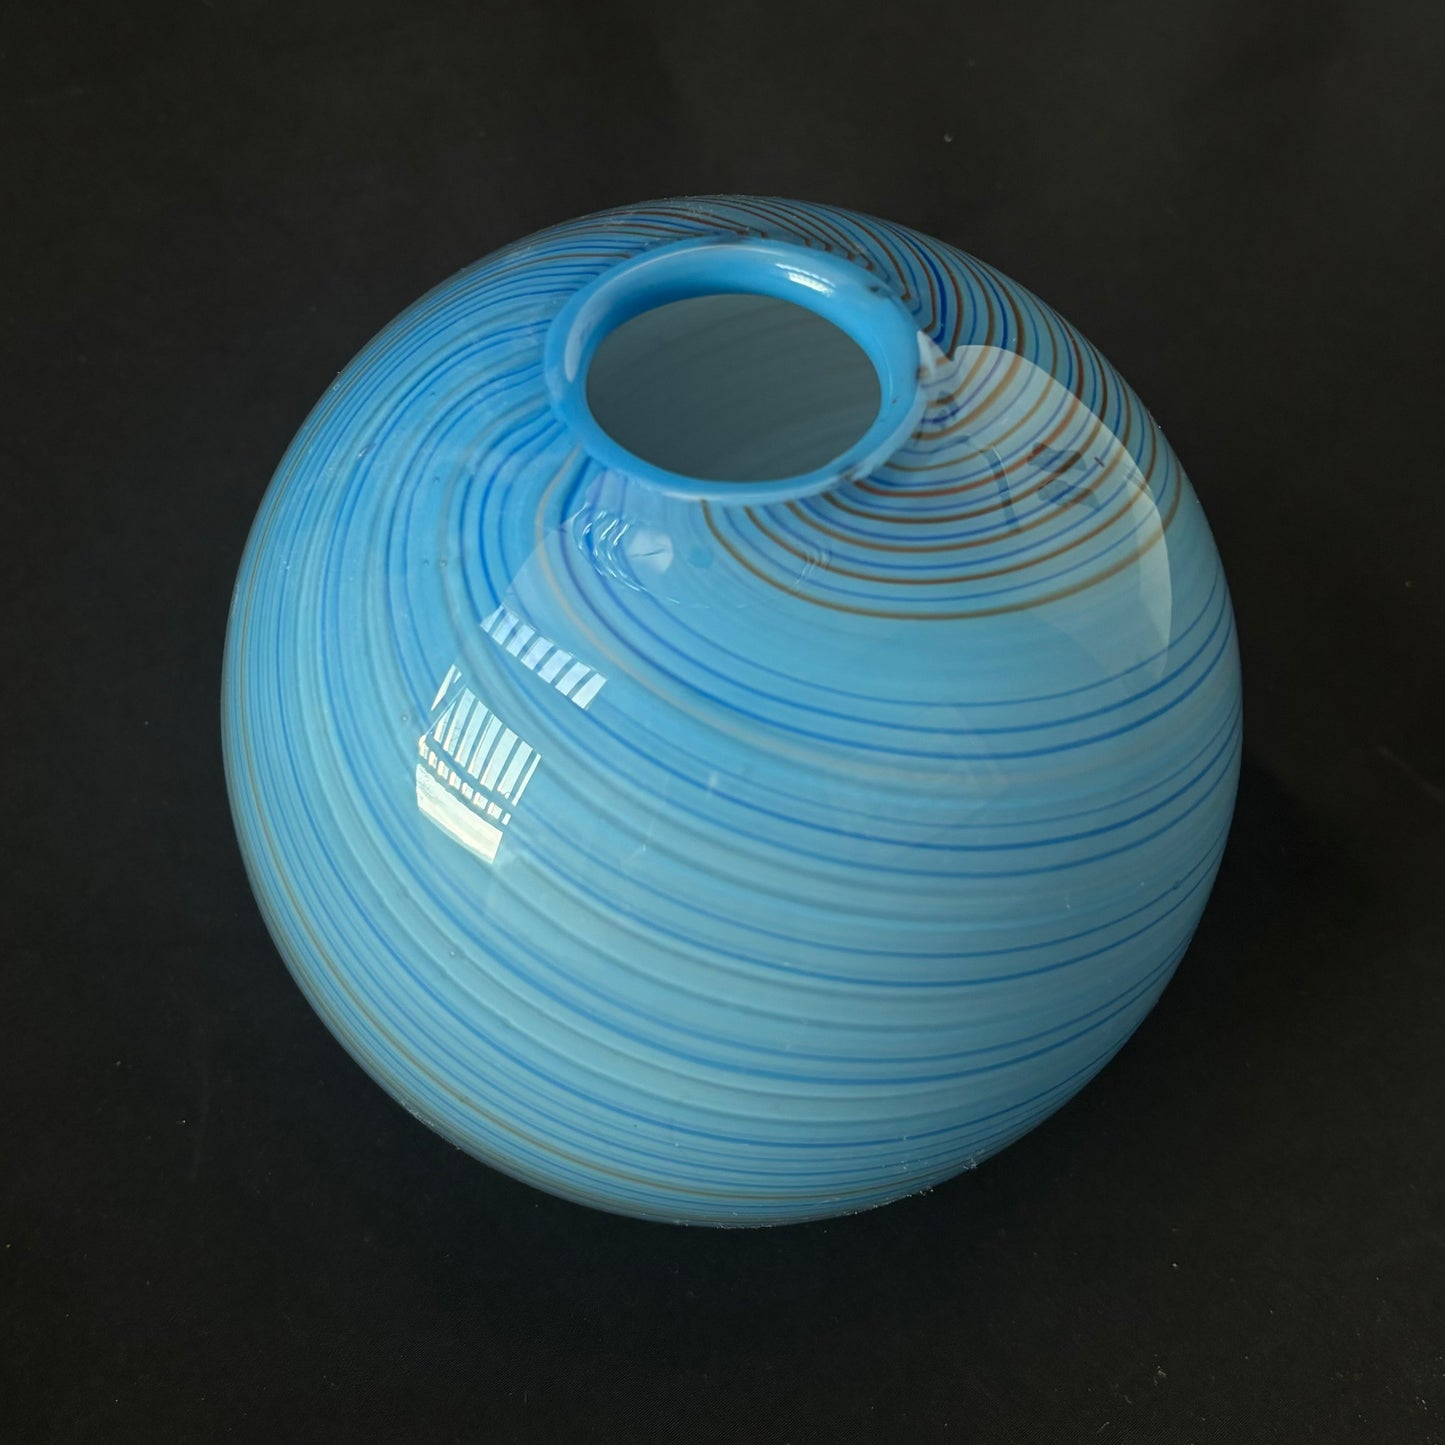 Blue Swirl Vase